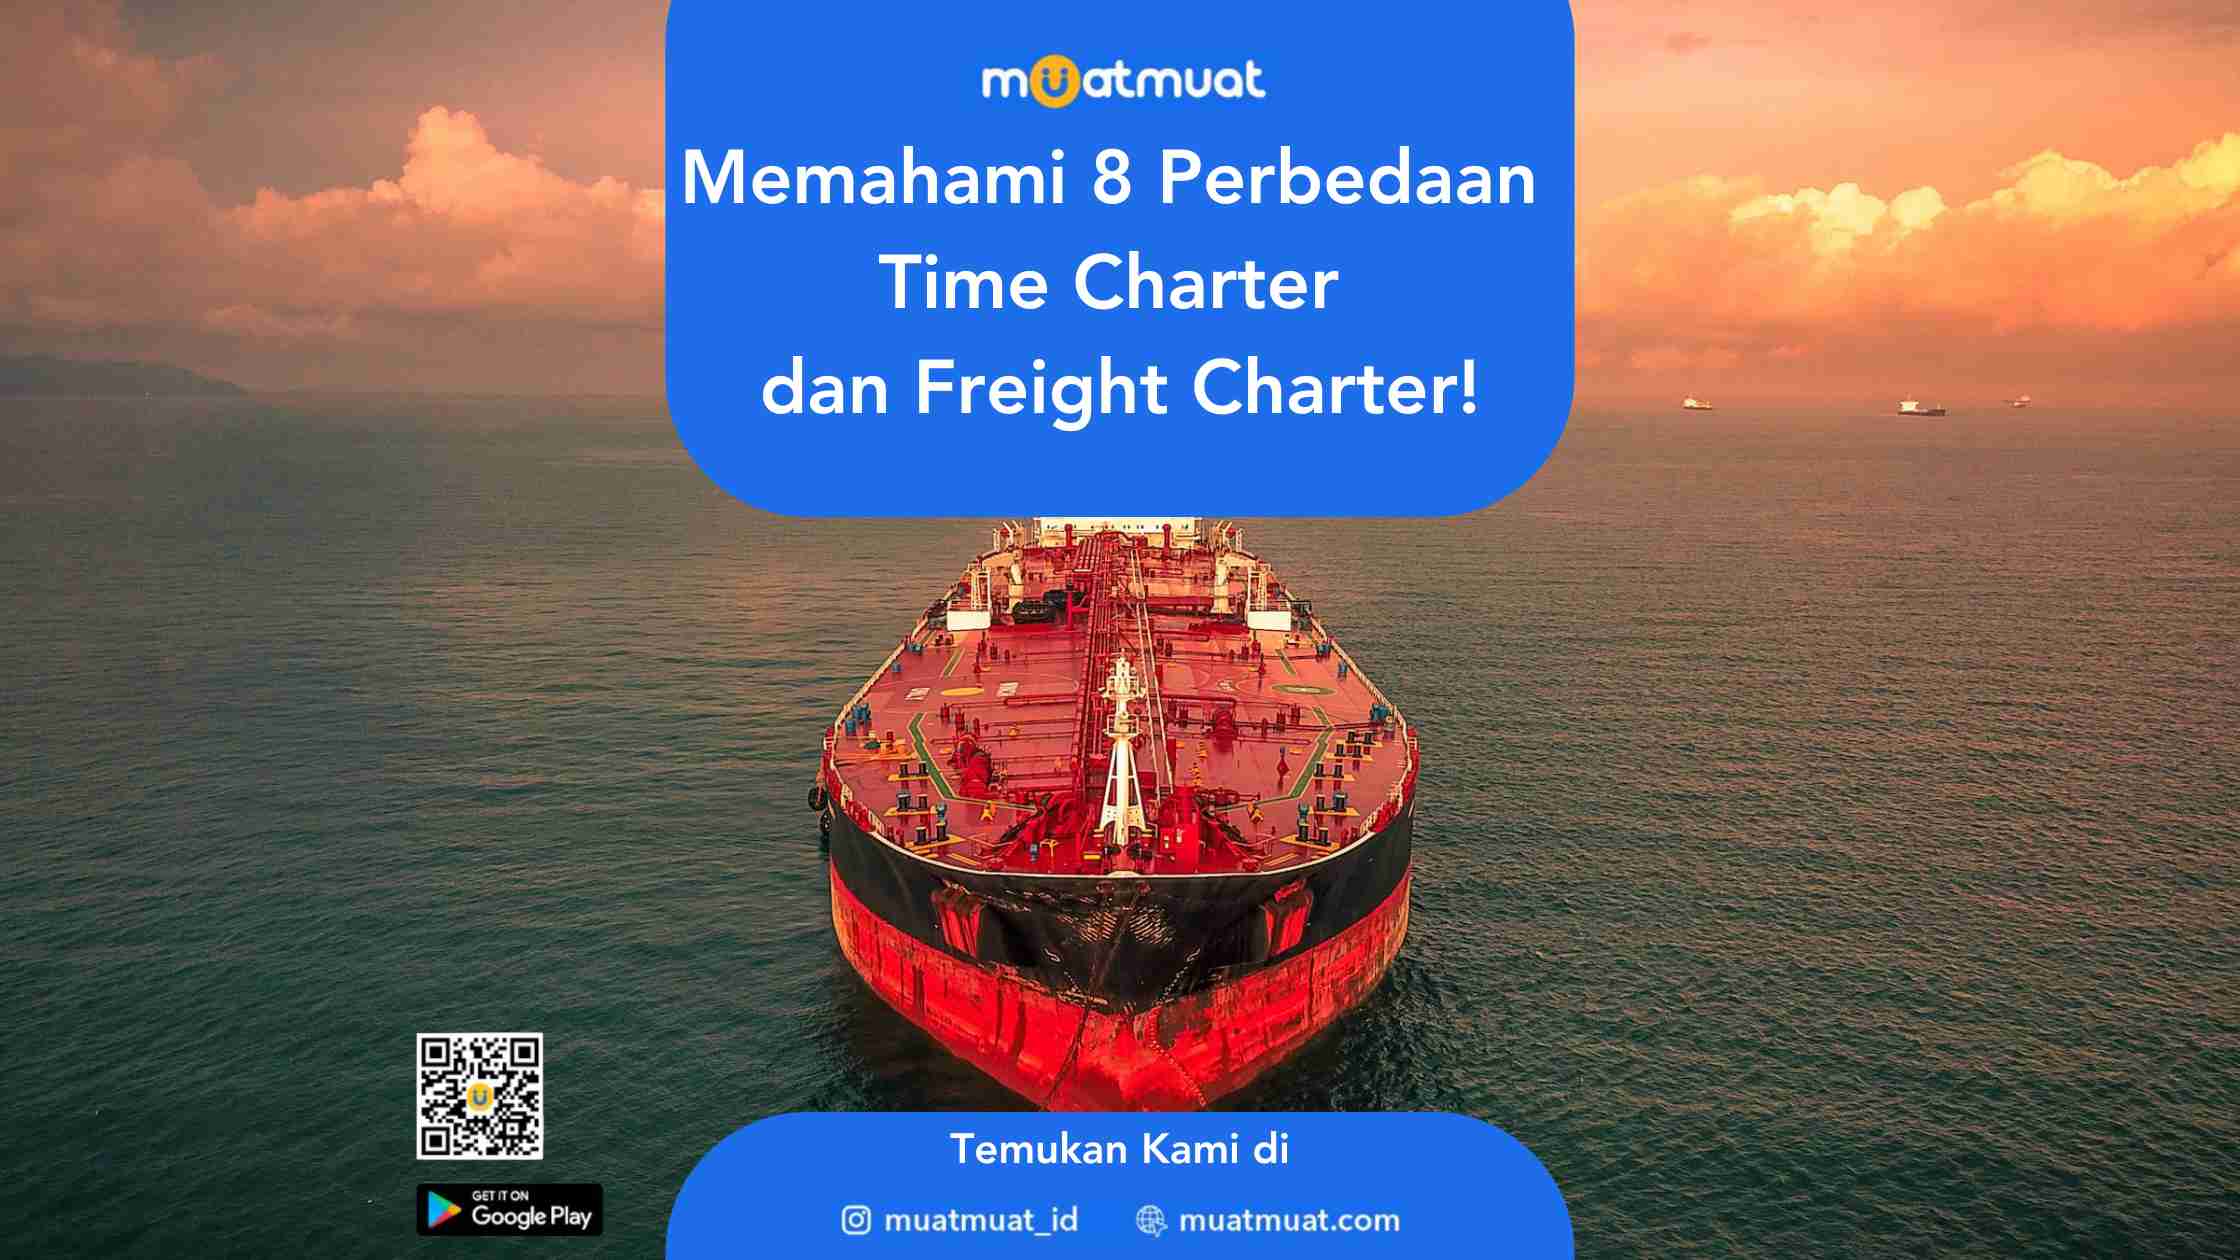 perbedaan Time Charter dan Freight Charter